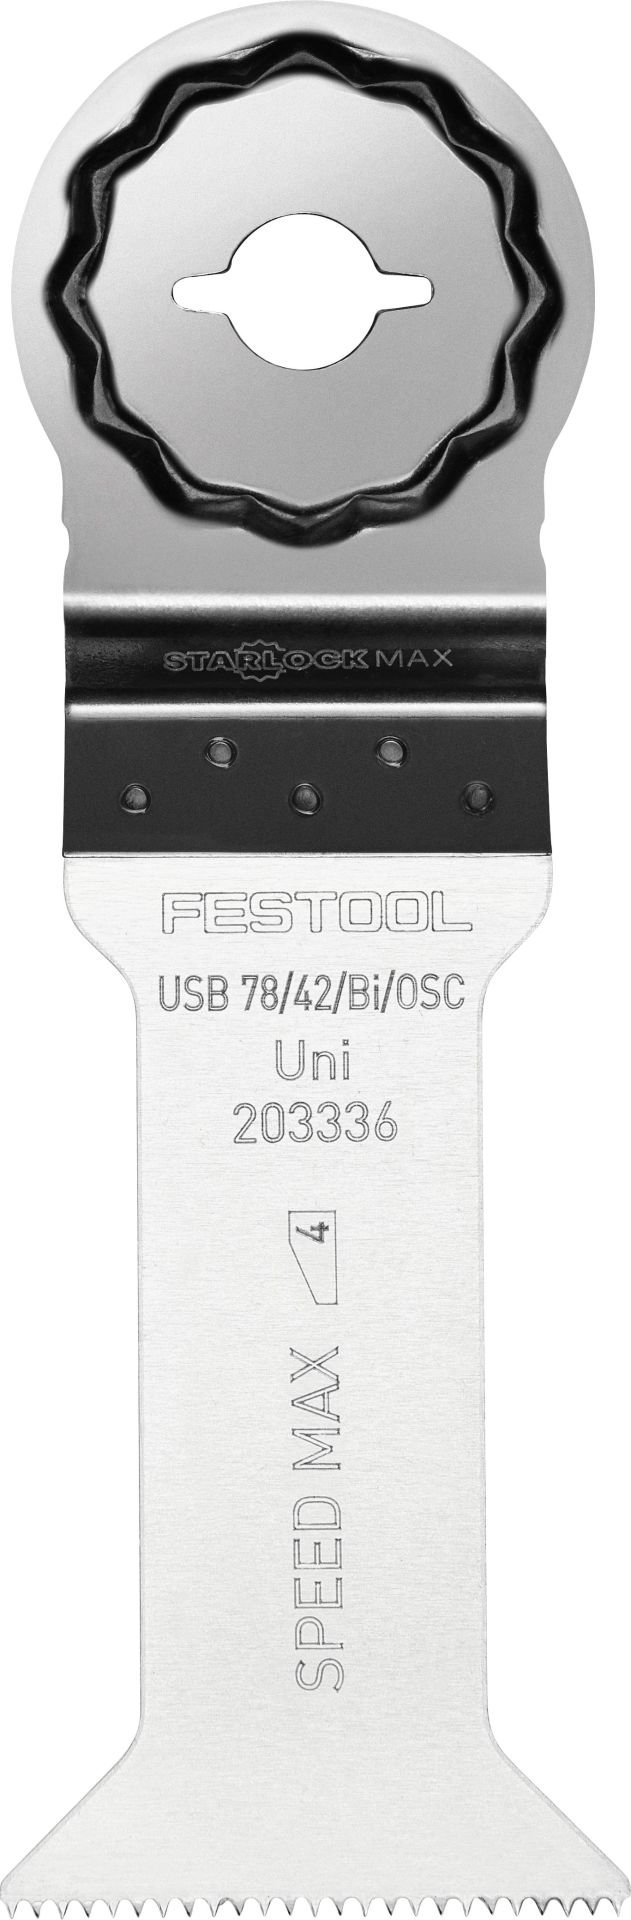 Üniversal testere bıçağı USB 78/42/Bi/OSC/5